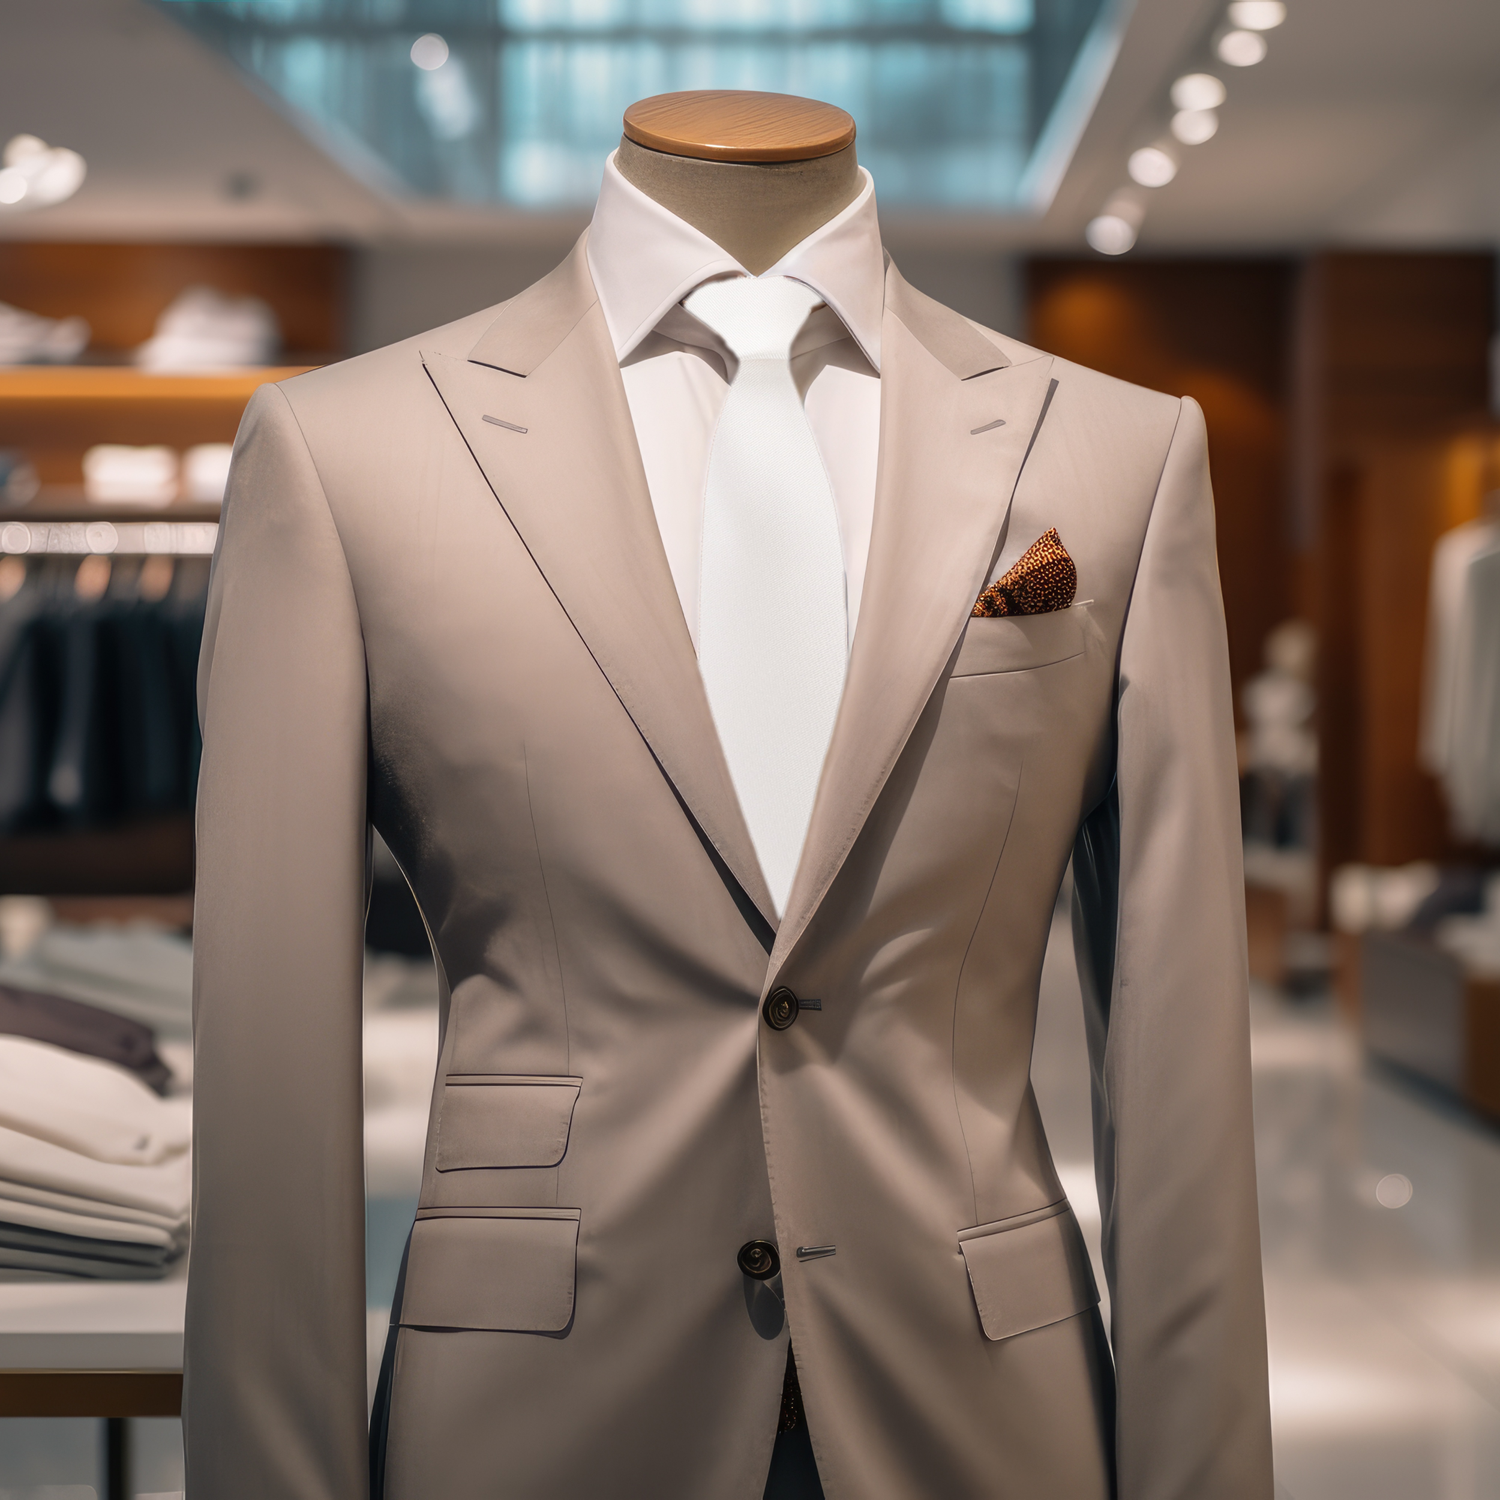 Ivory White Necktie on Brown Suit